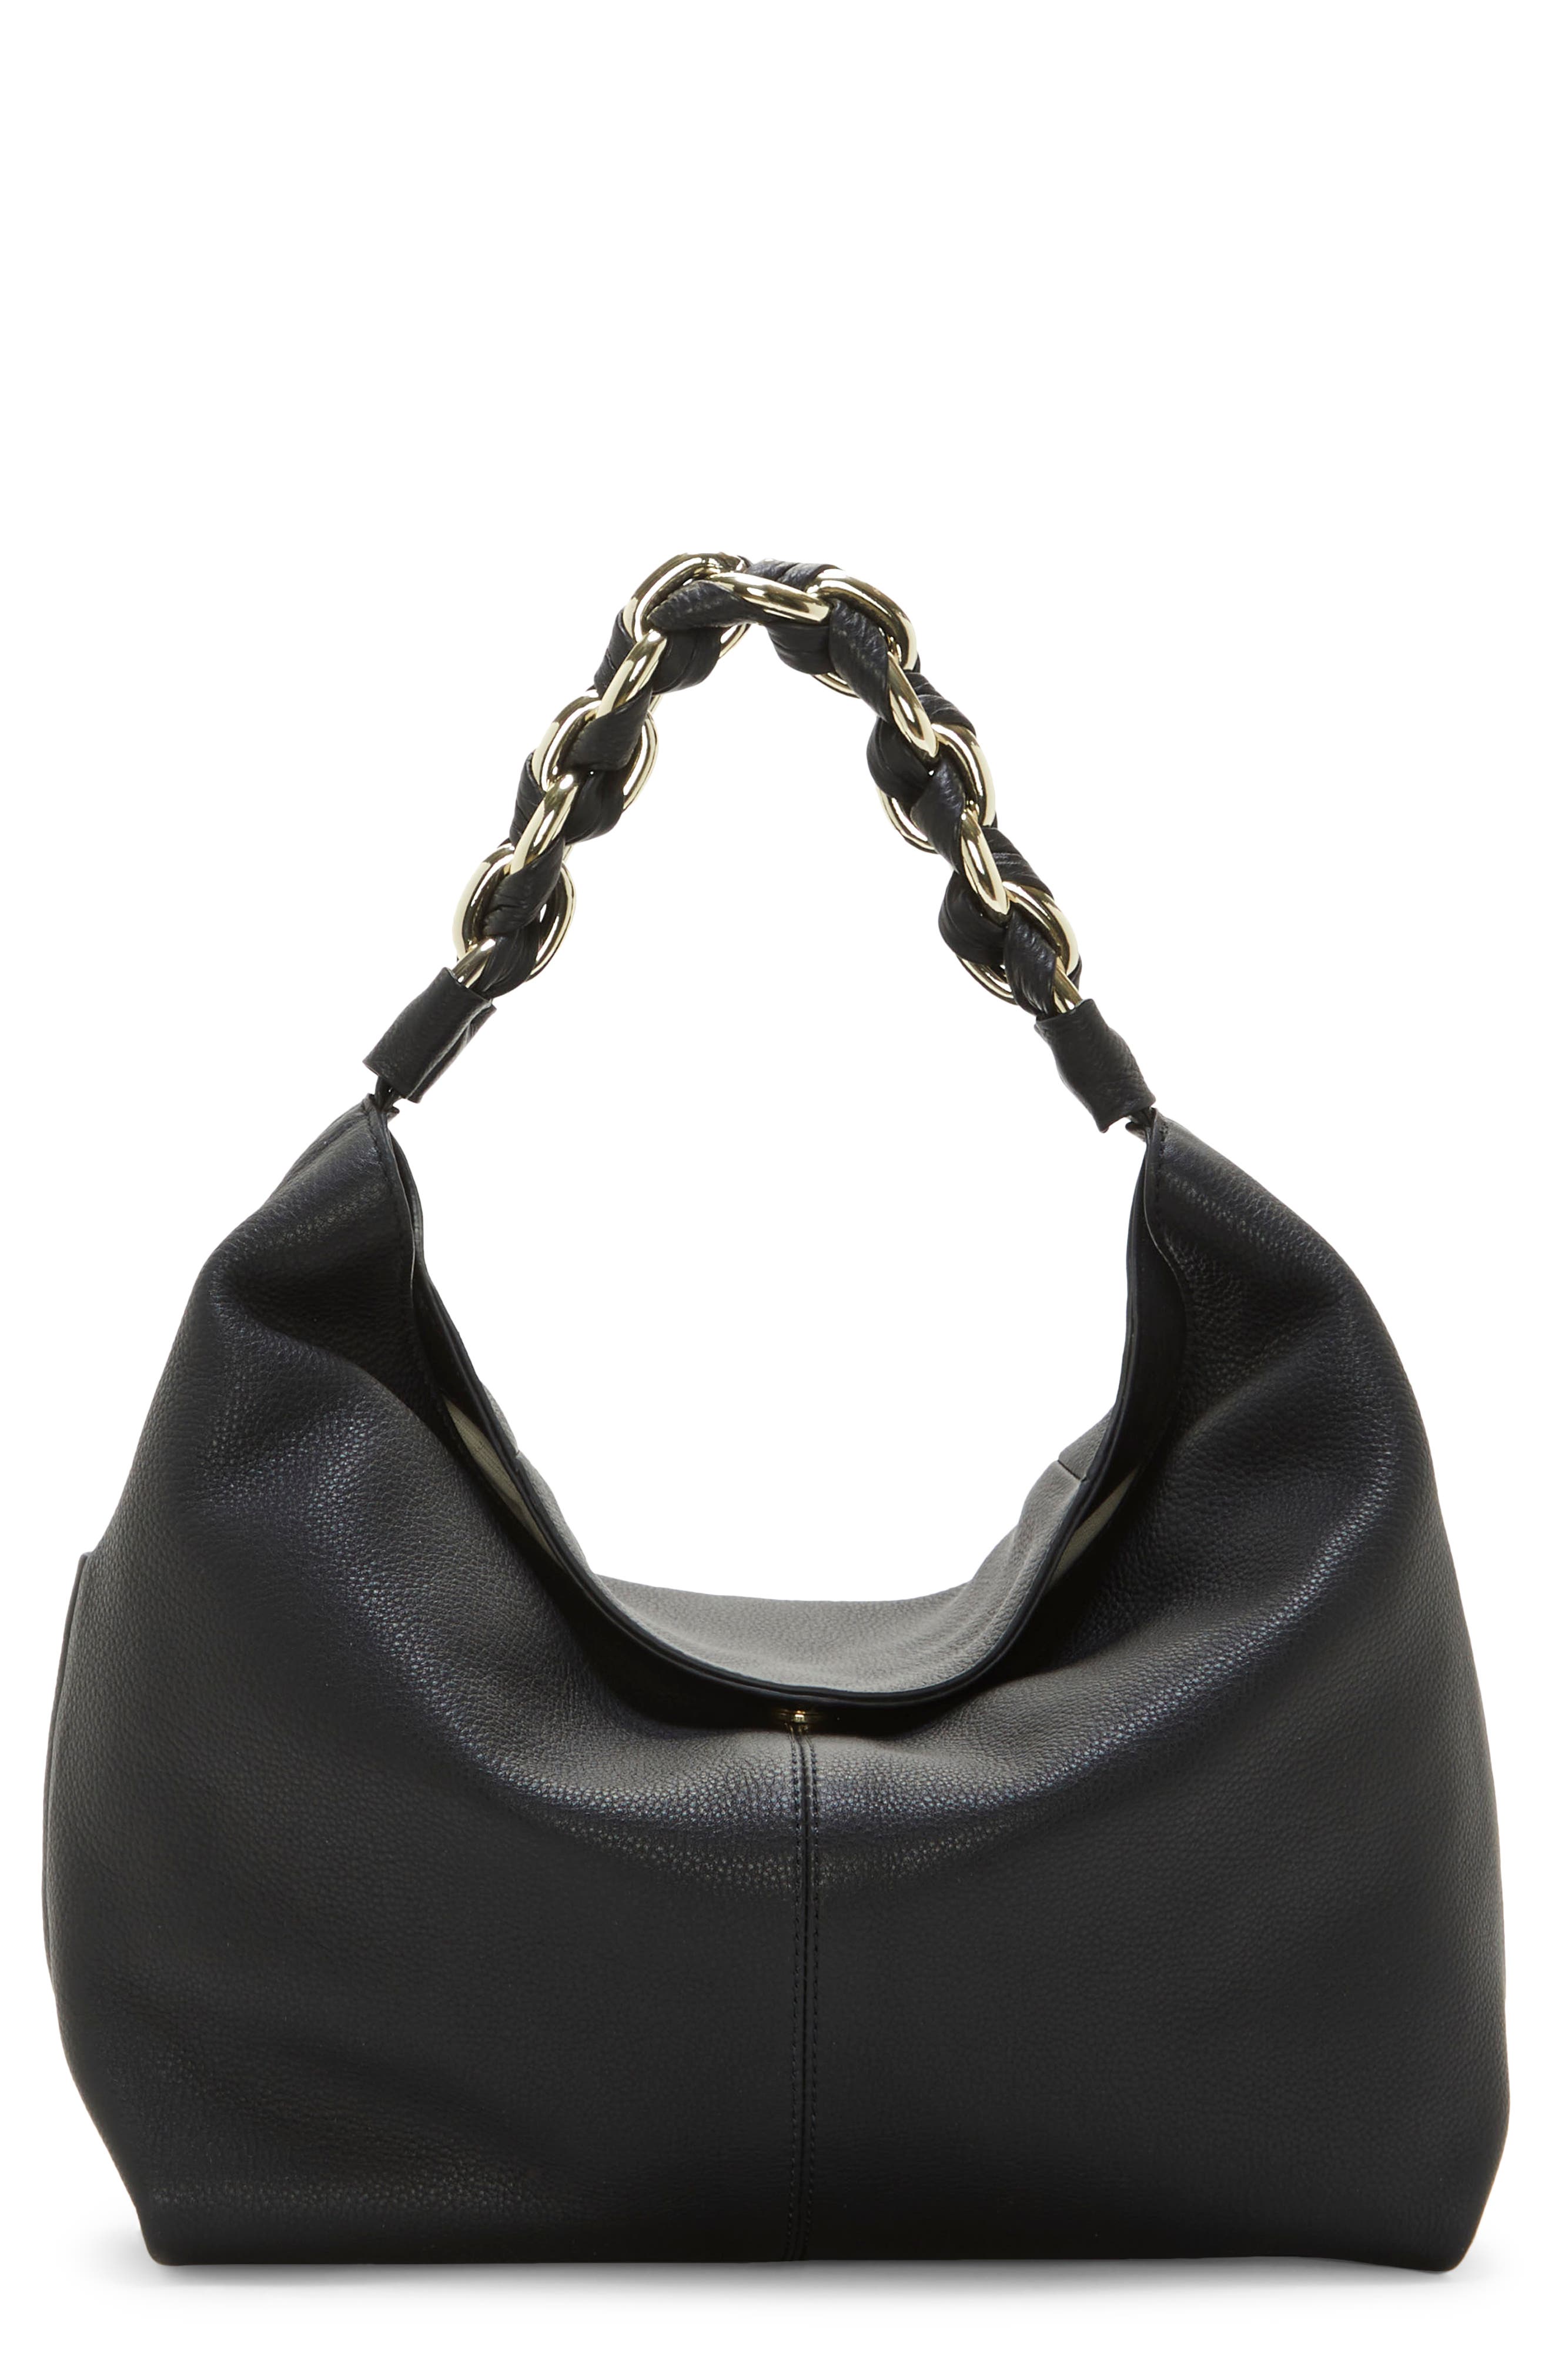 Hobo Bags for Women Handbags Purse Ladies Boho Shoulder Bag Crossbody Purses Faux Leather 